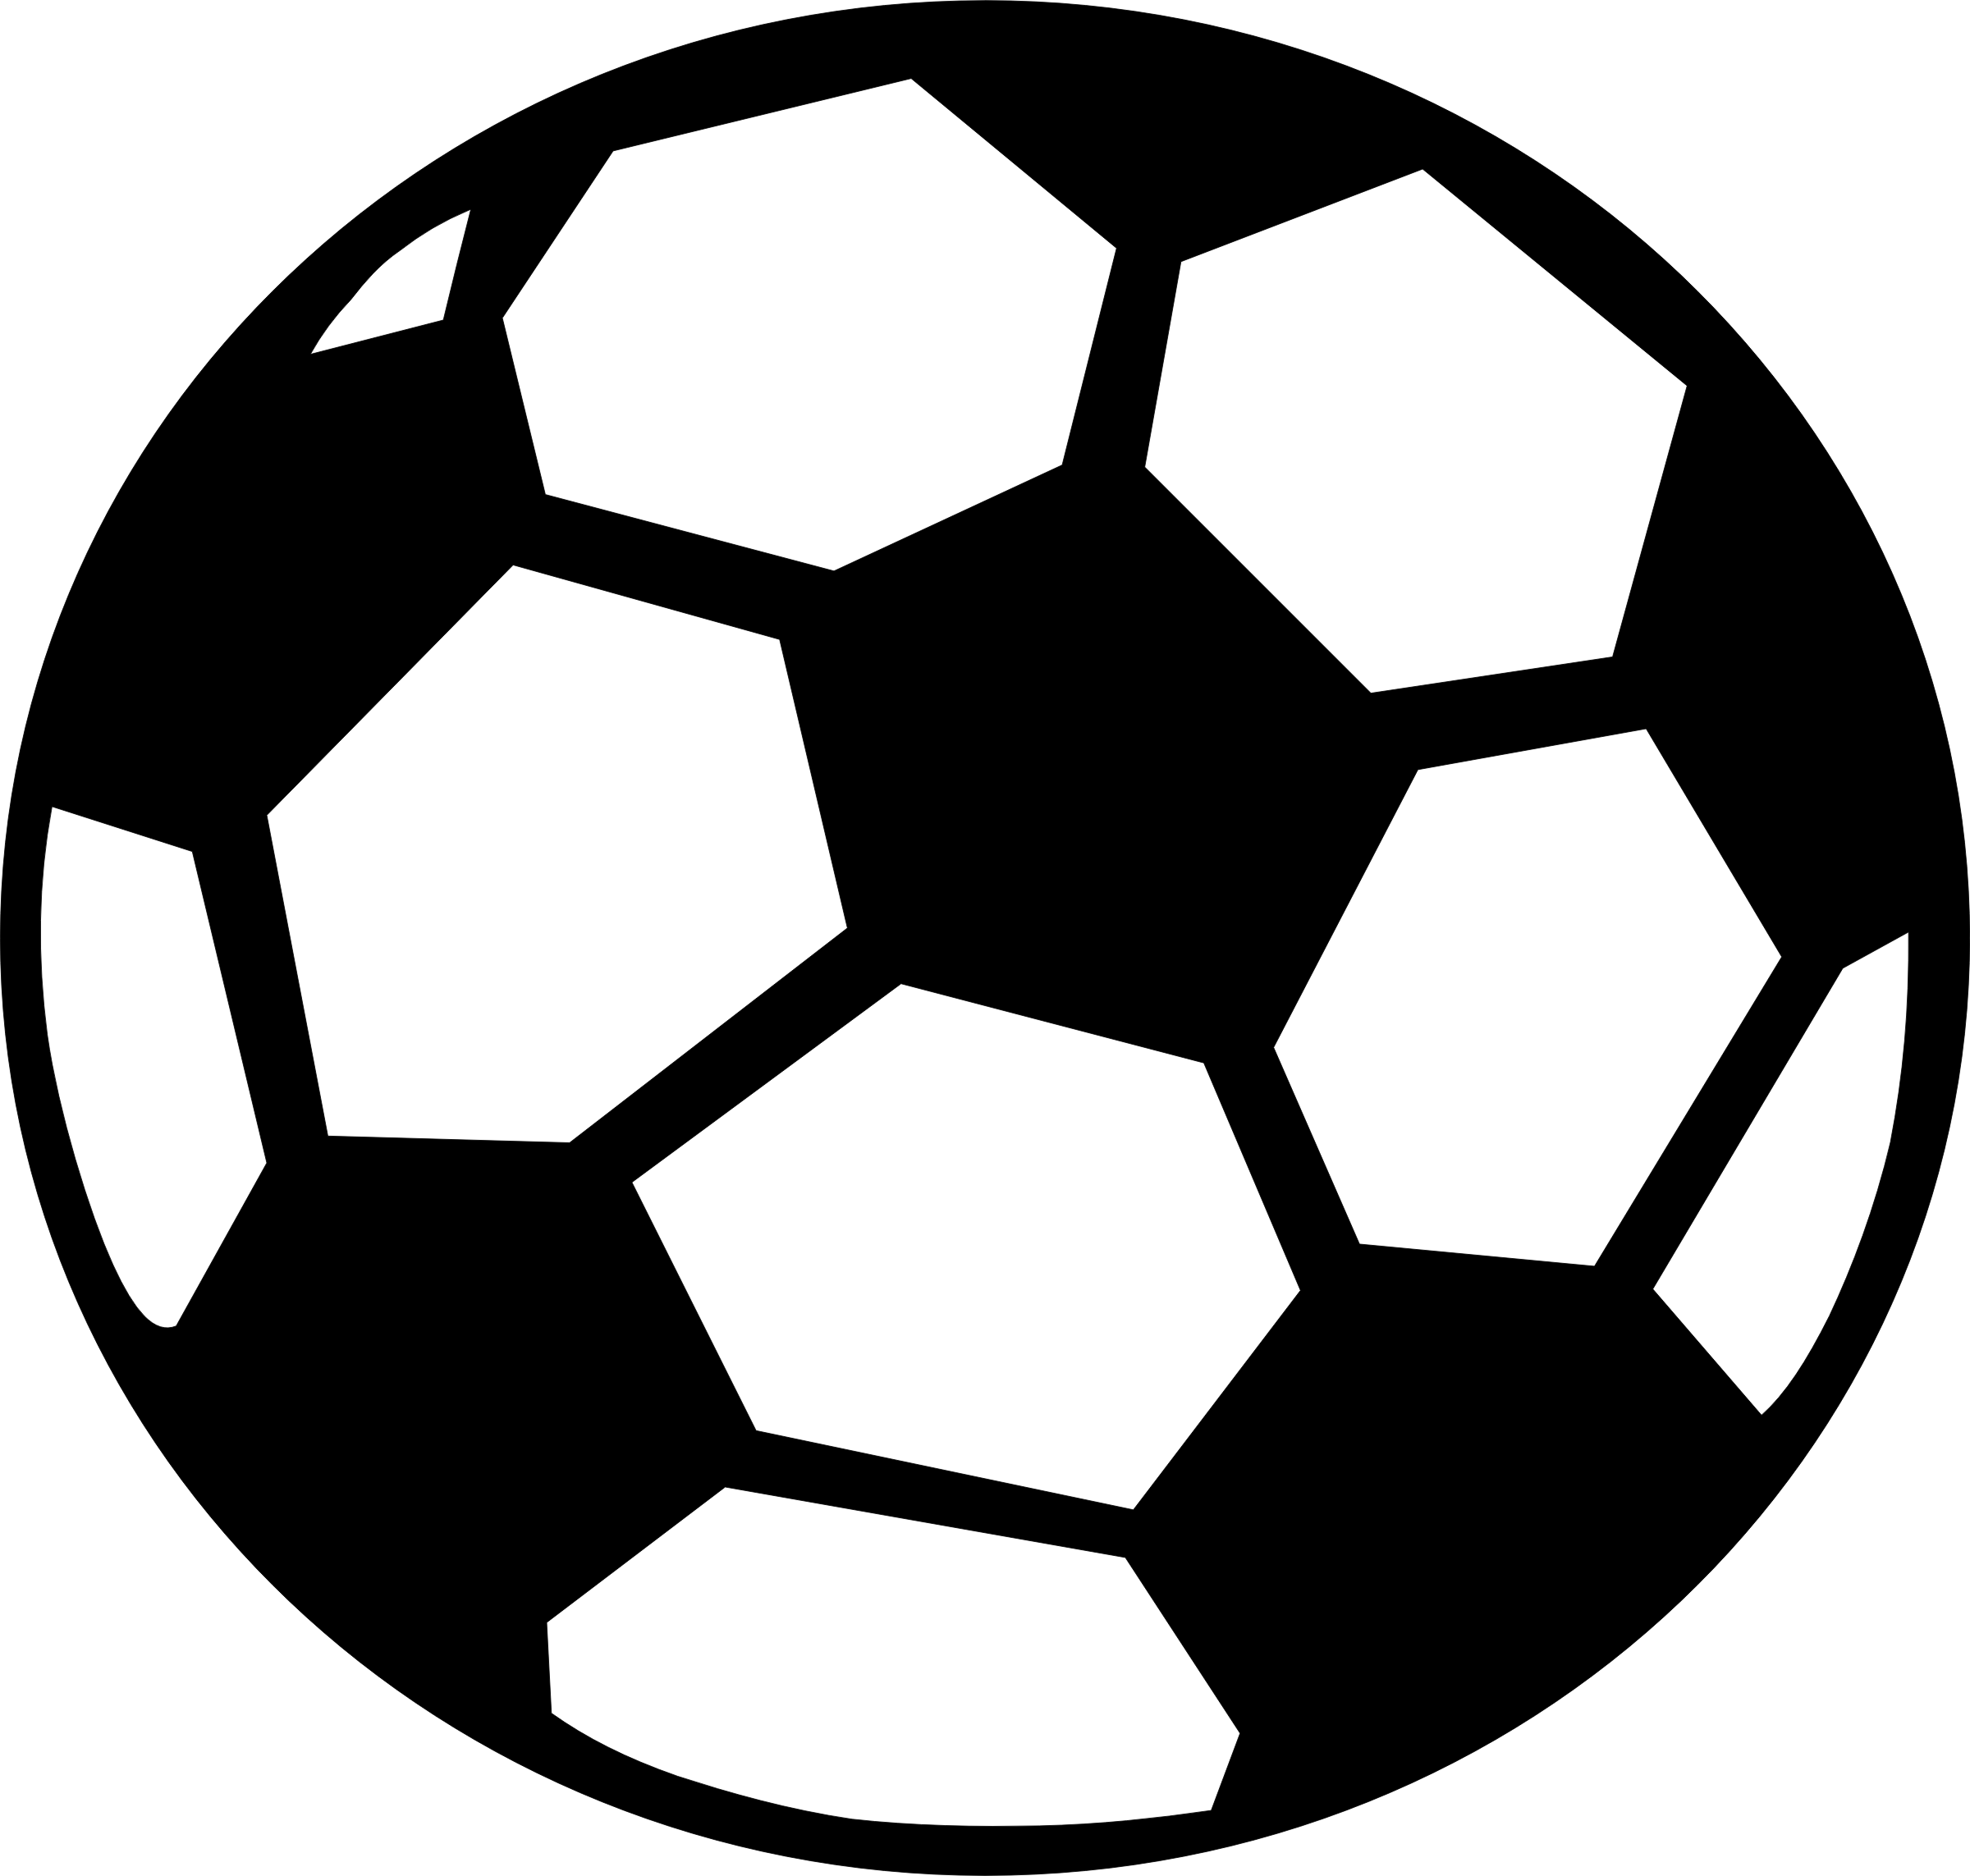 Clipart football foot ball. Soccer